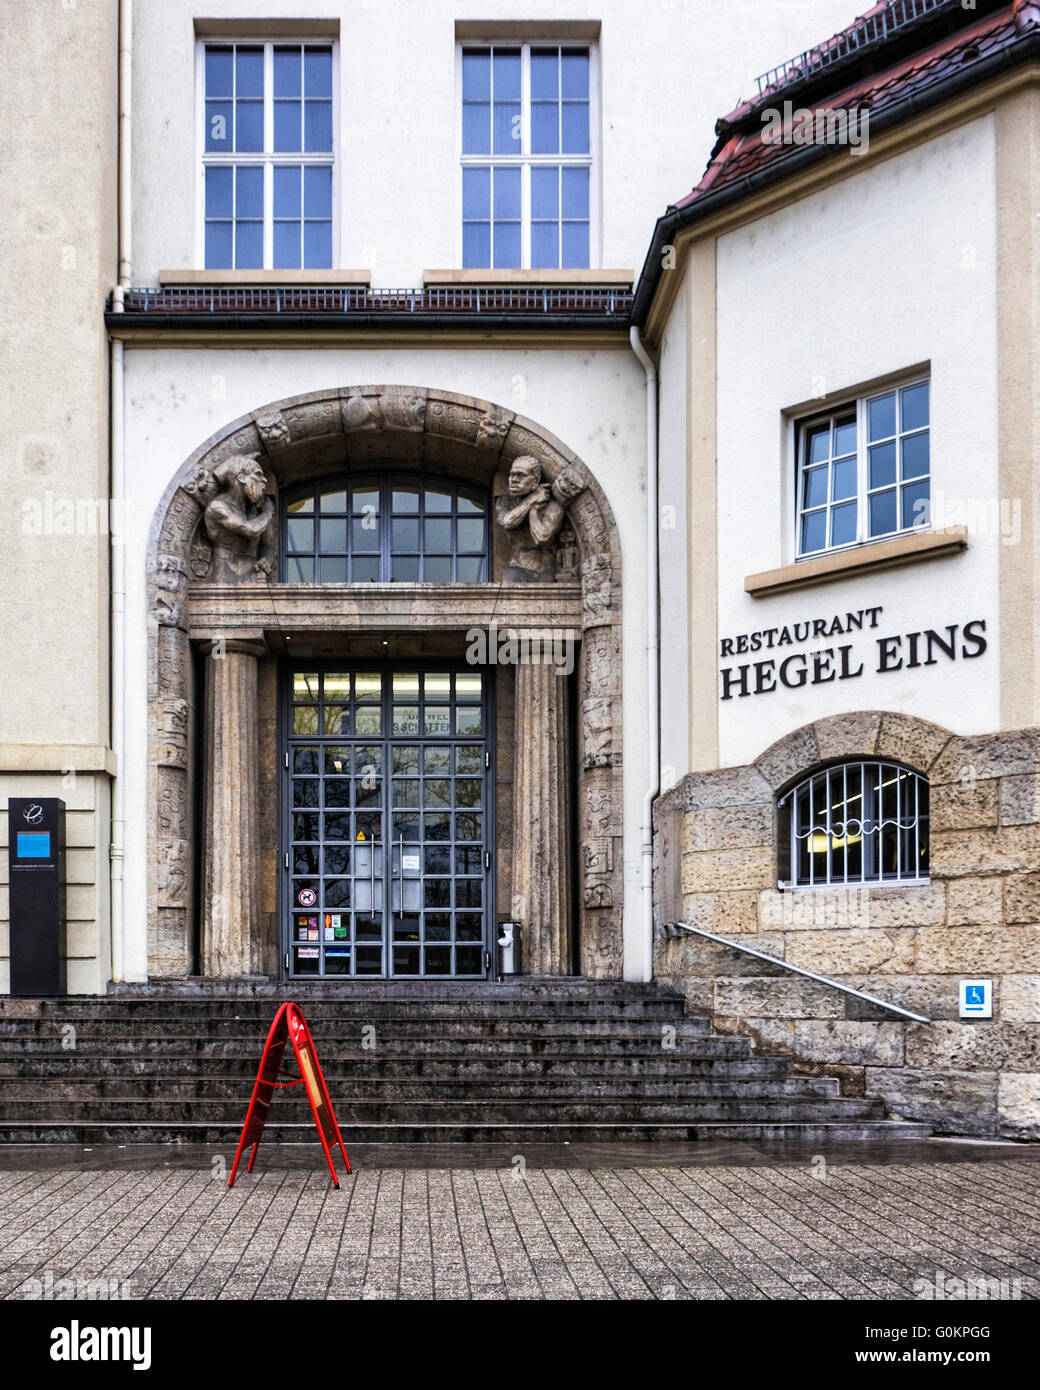 Stuttgart, Germany Linden Museum and Restaurant Hegel Eins exterior. Historic Old Building Stock Photo